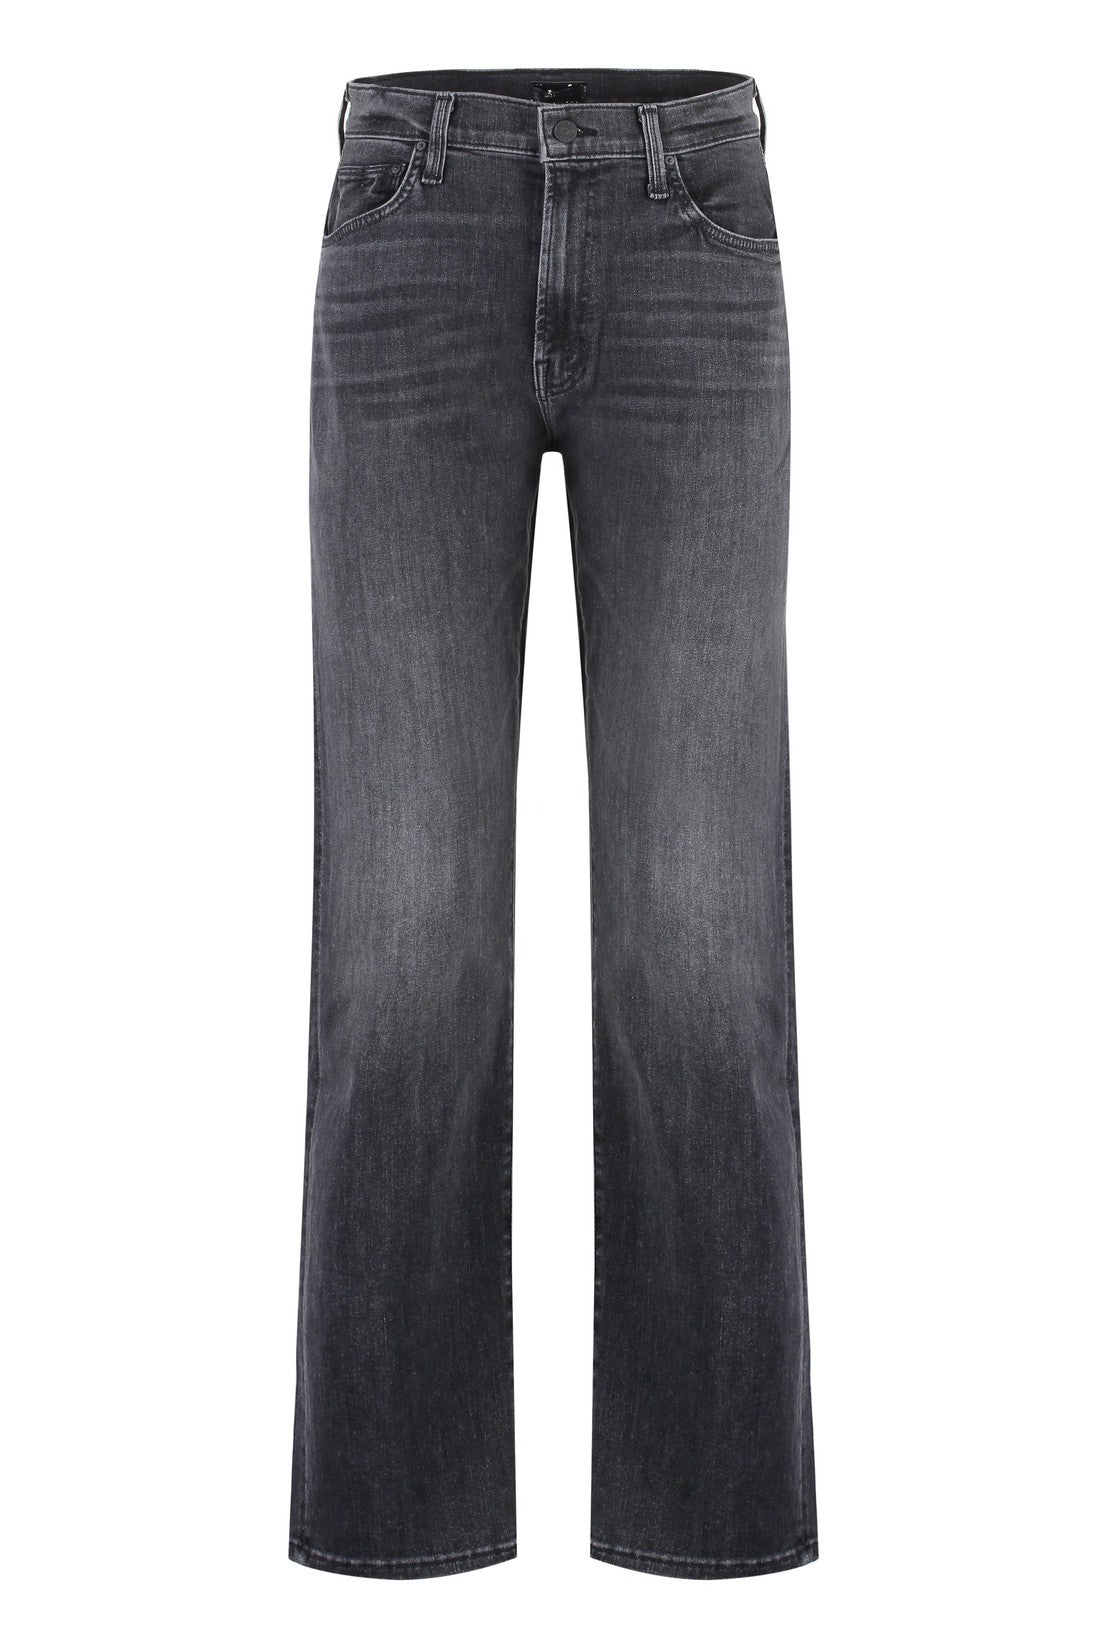 Mother-OUTLET-SALE-The Ditcher Zip Ankle jeans-ARCHIVIST